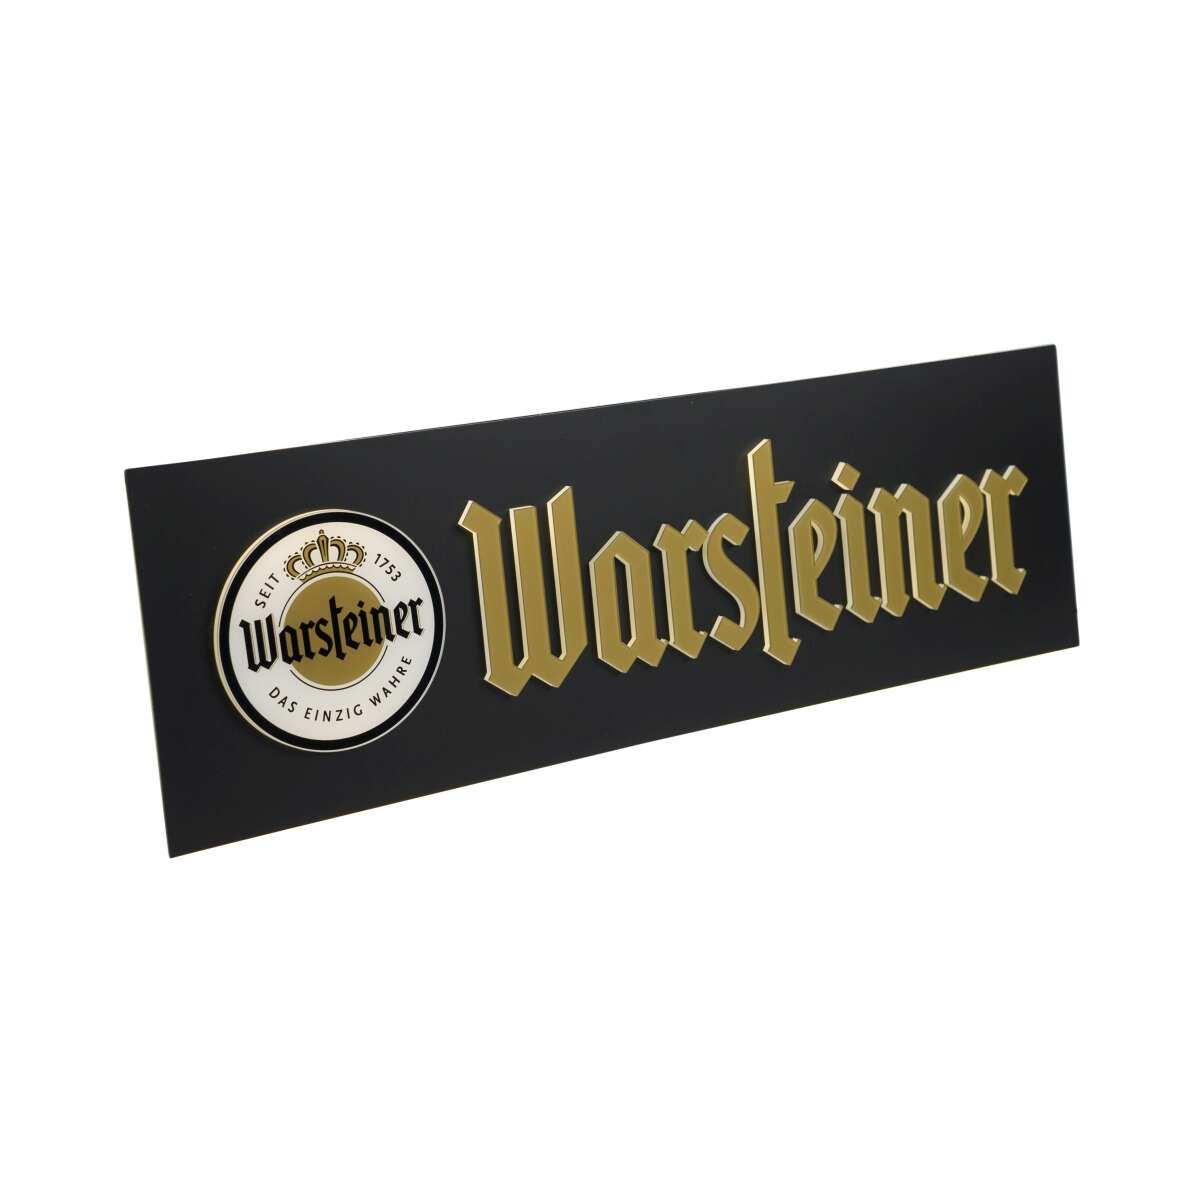 https://barmeister24.de/media/image/product/7687/lg/warsteiner-bier-leuchtreklame-74x25cm-led-schriftzug-wand-schild-tafel-deko.jpg